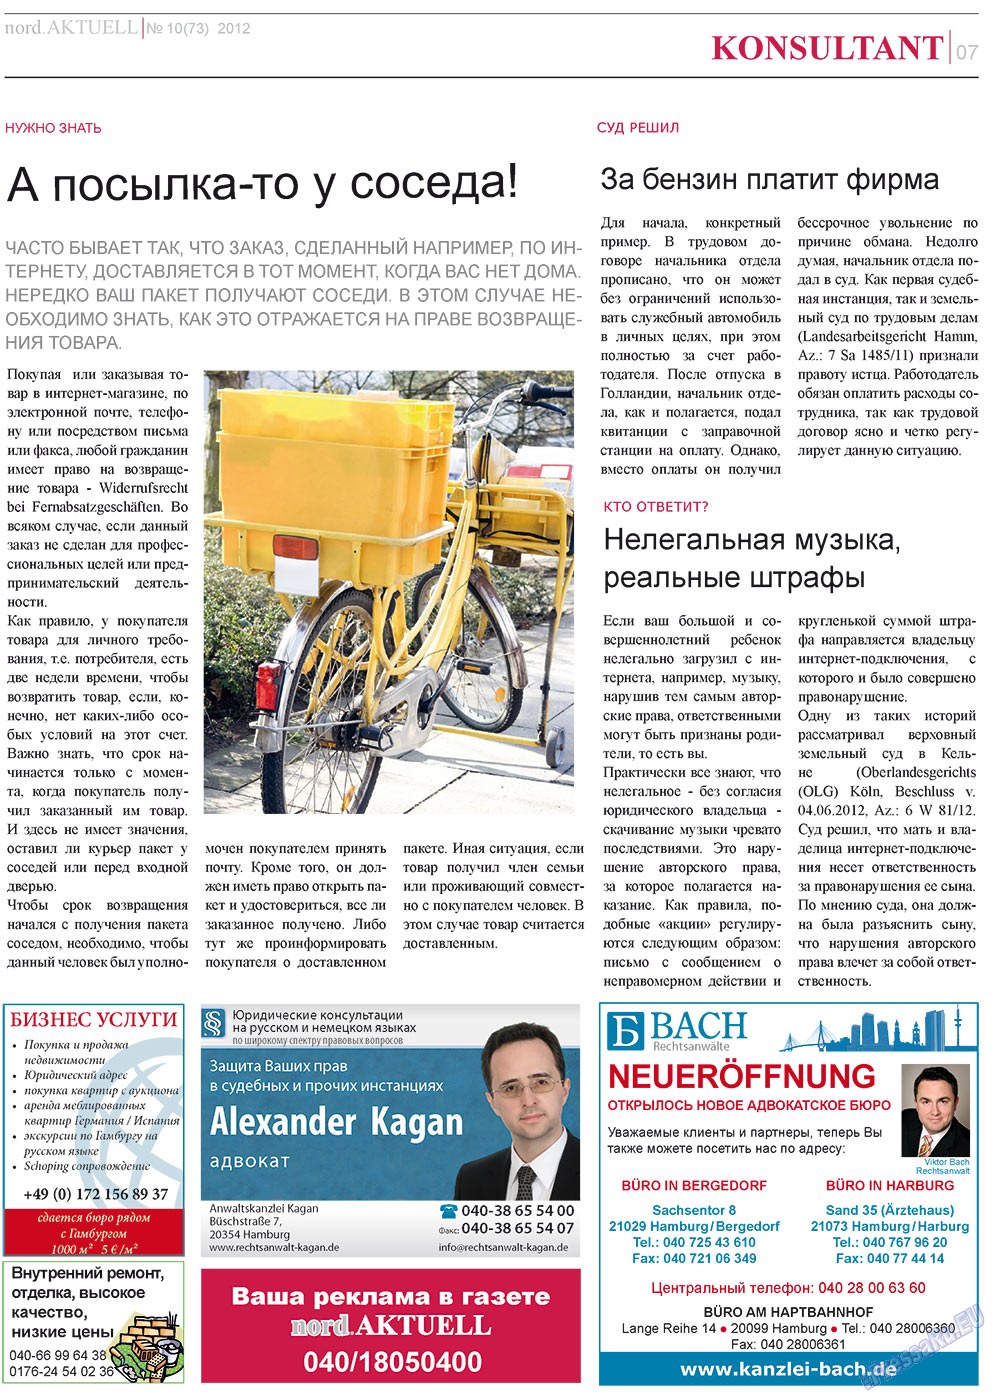 nord.Aktuell, газета. 2012 №10 стр.7